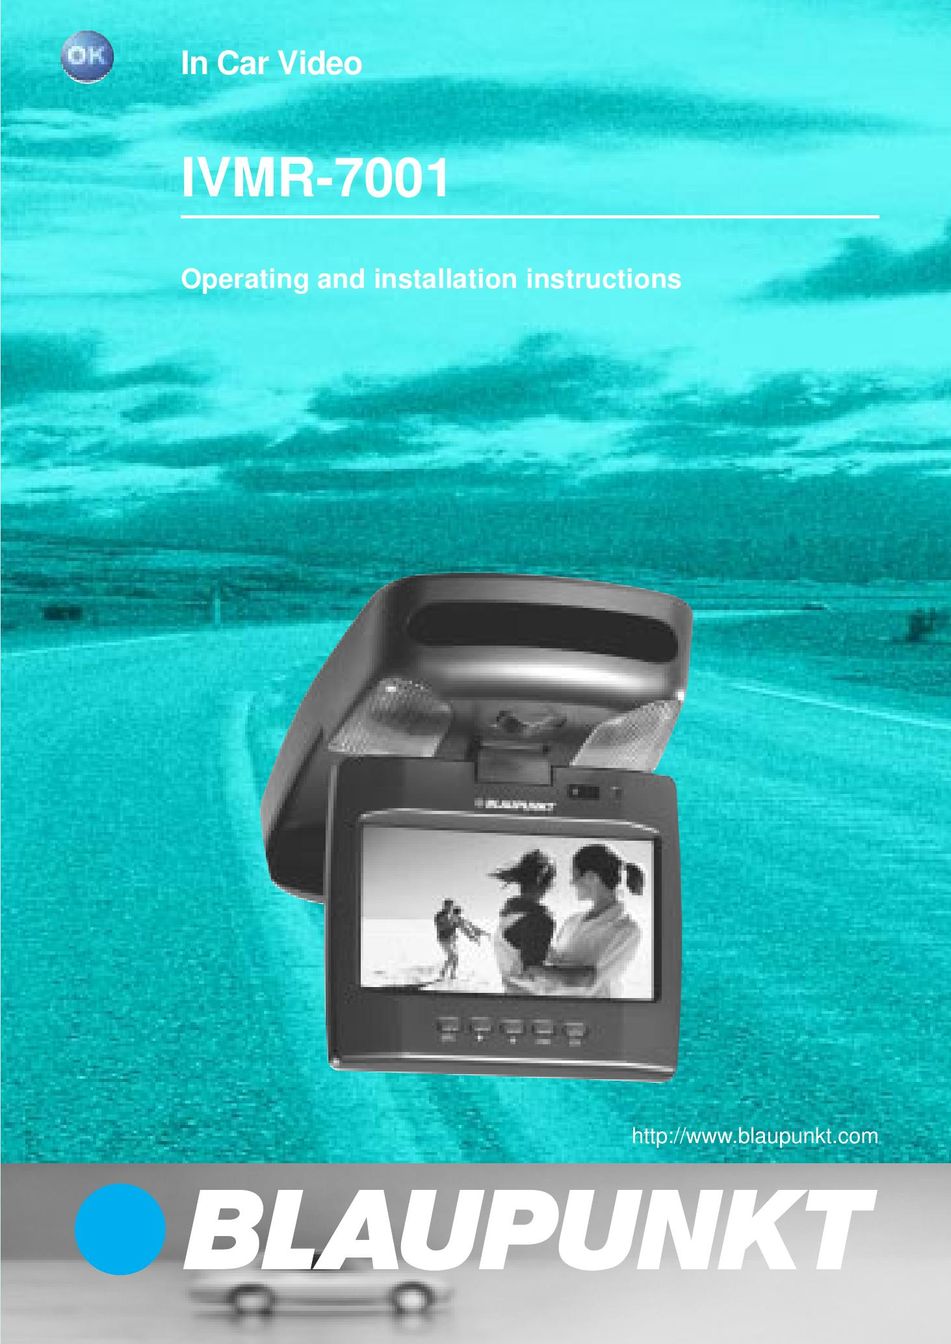 Blaupunkt IVMR-7001 Car Video System User Manual